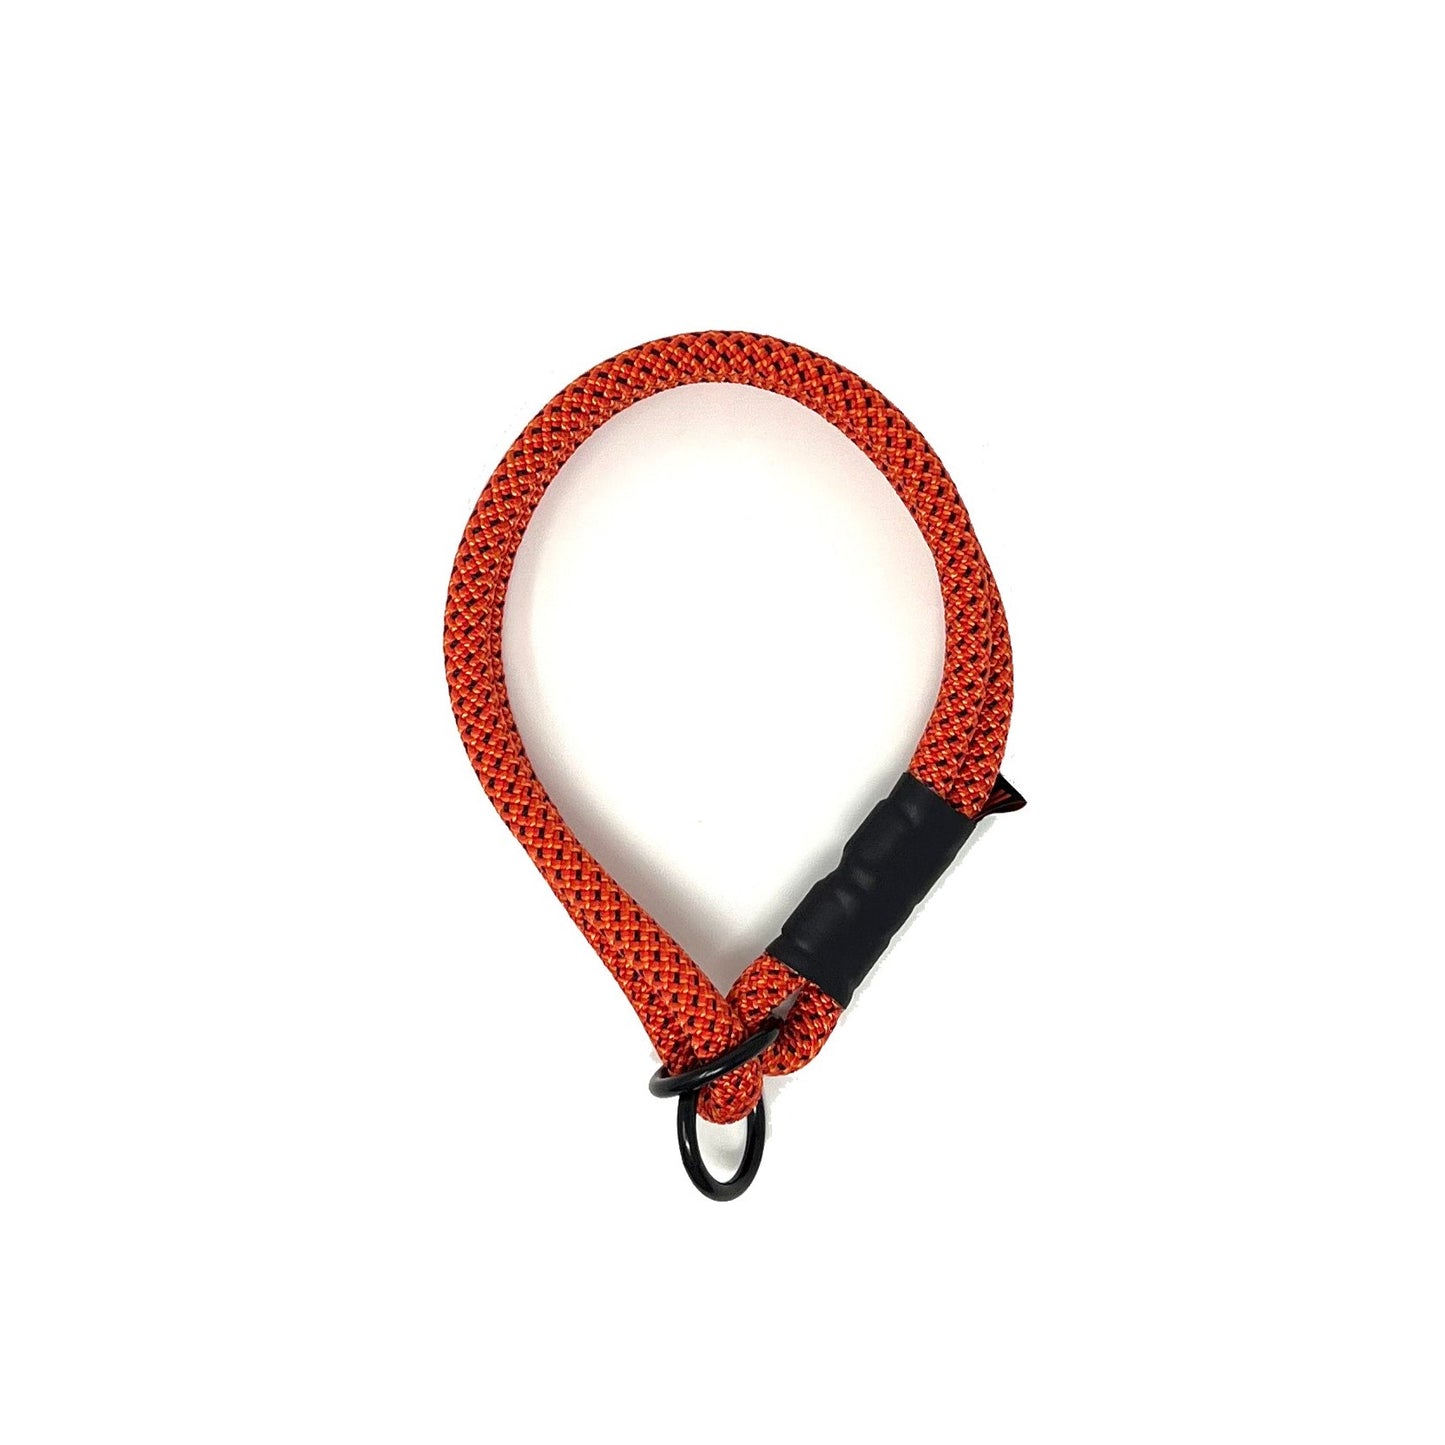 Rope Slip Collar - Moab Burnt Orange